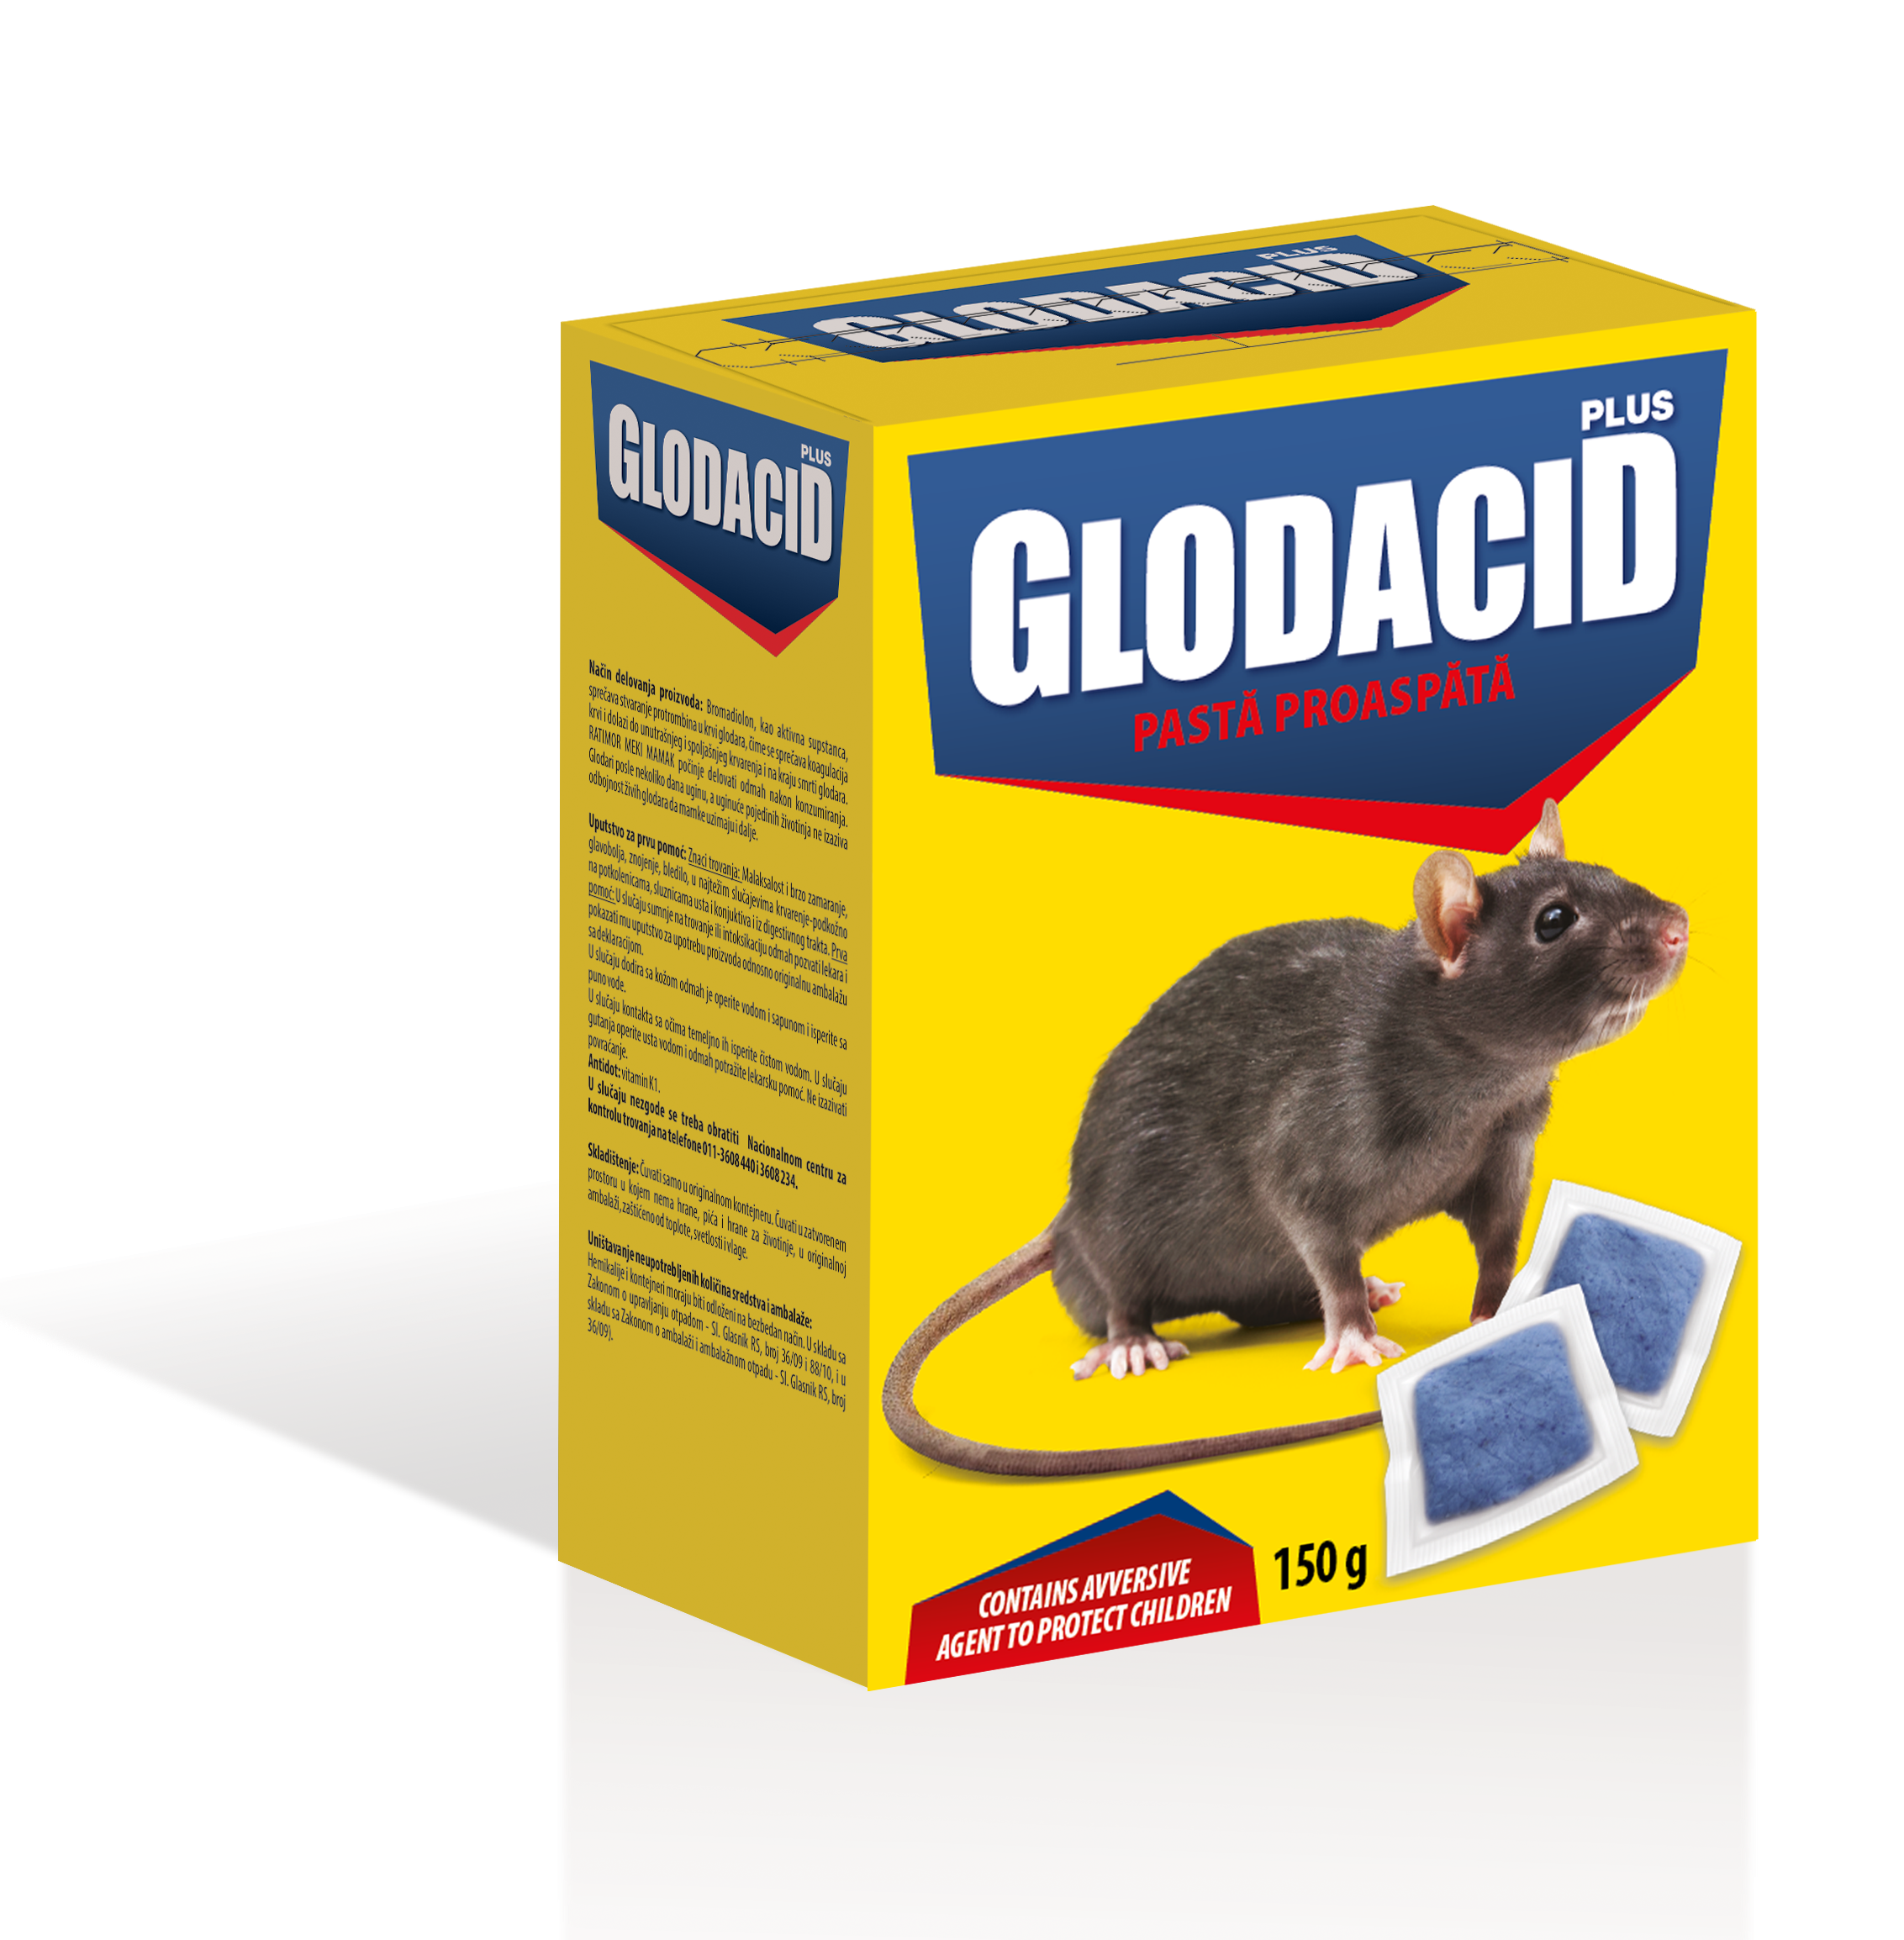 Raticid pasta Glodacid Plus - 150 gr.